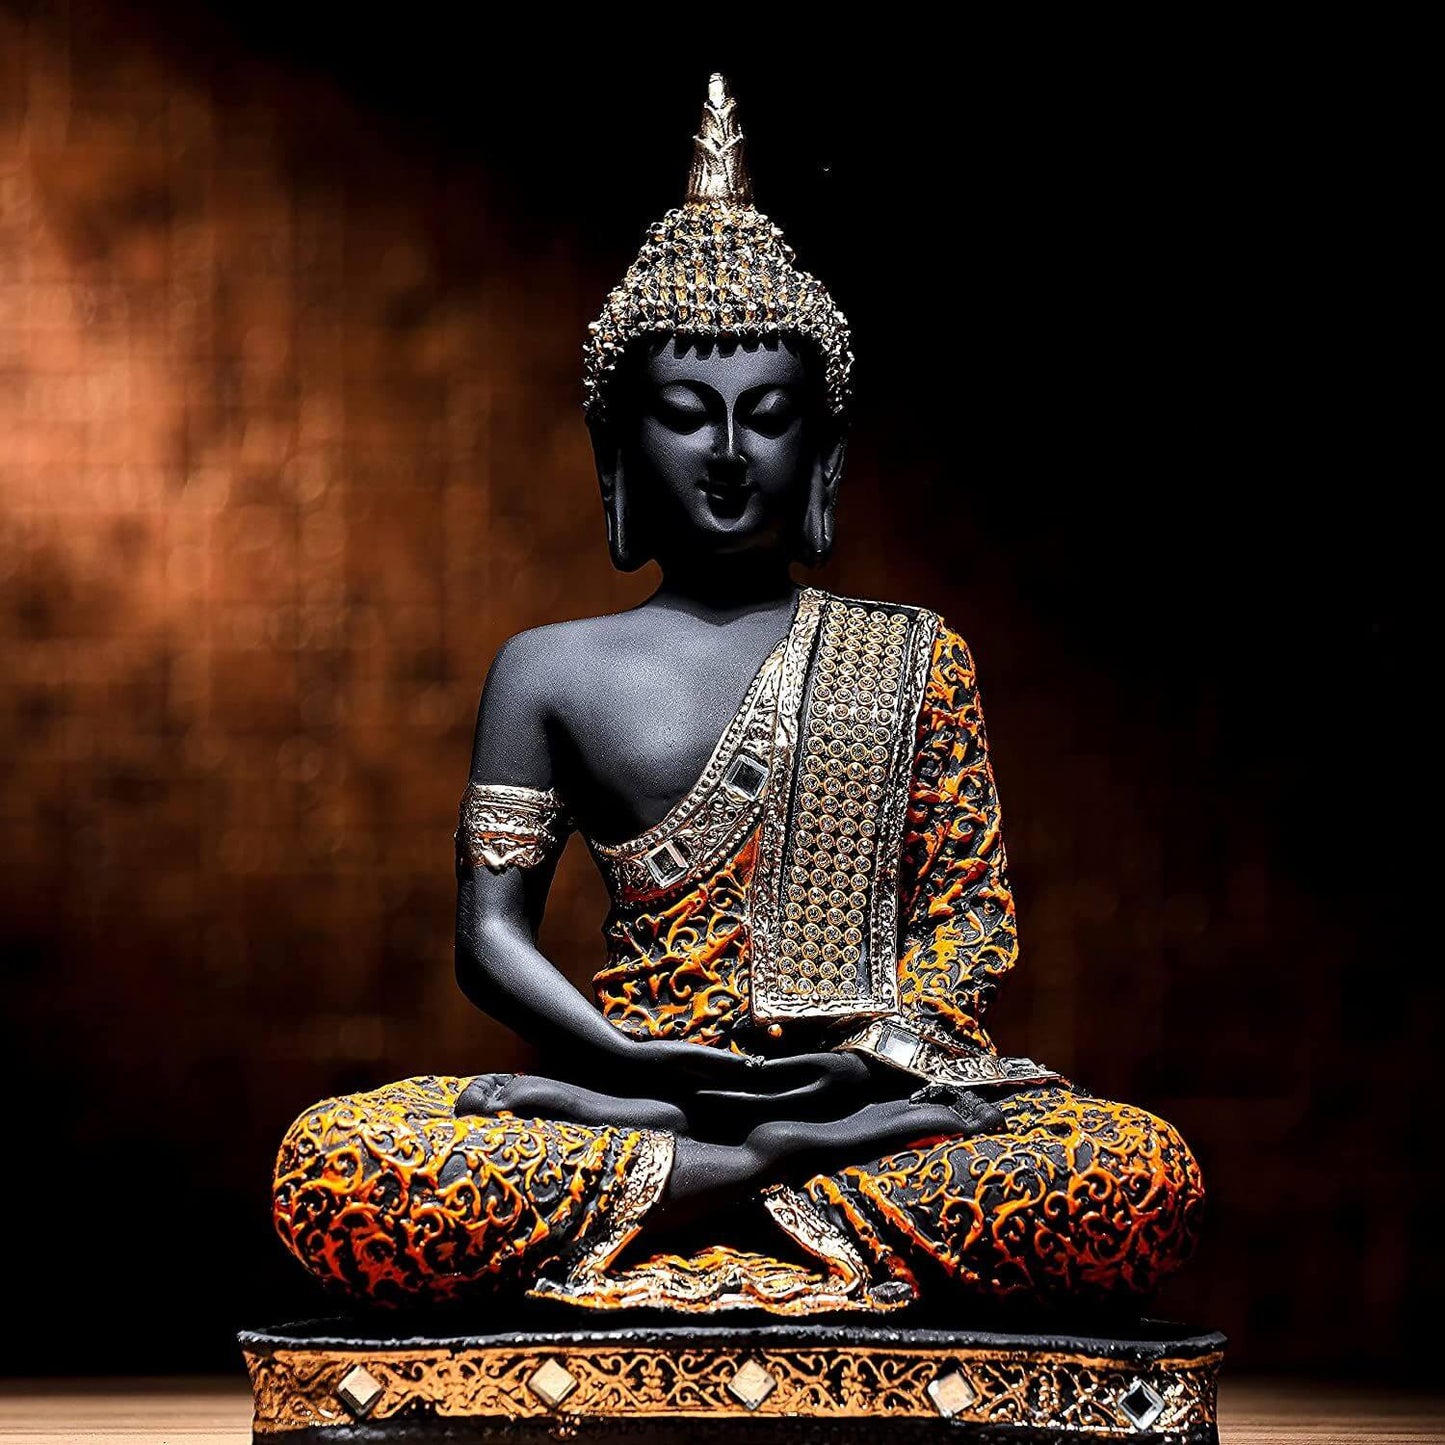 9.5 inch Sitting Buddha Idol (300g) - Polyresin Statue Showpiece for Home Decor Decoration Gift Item